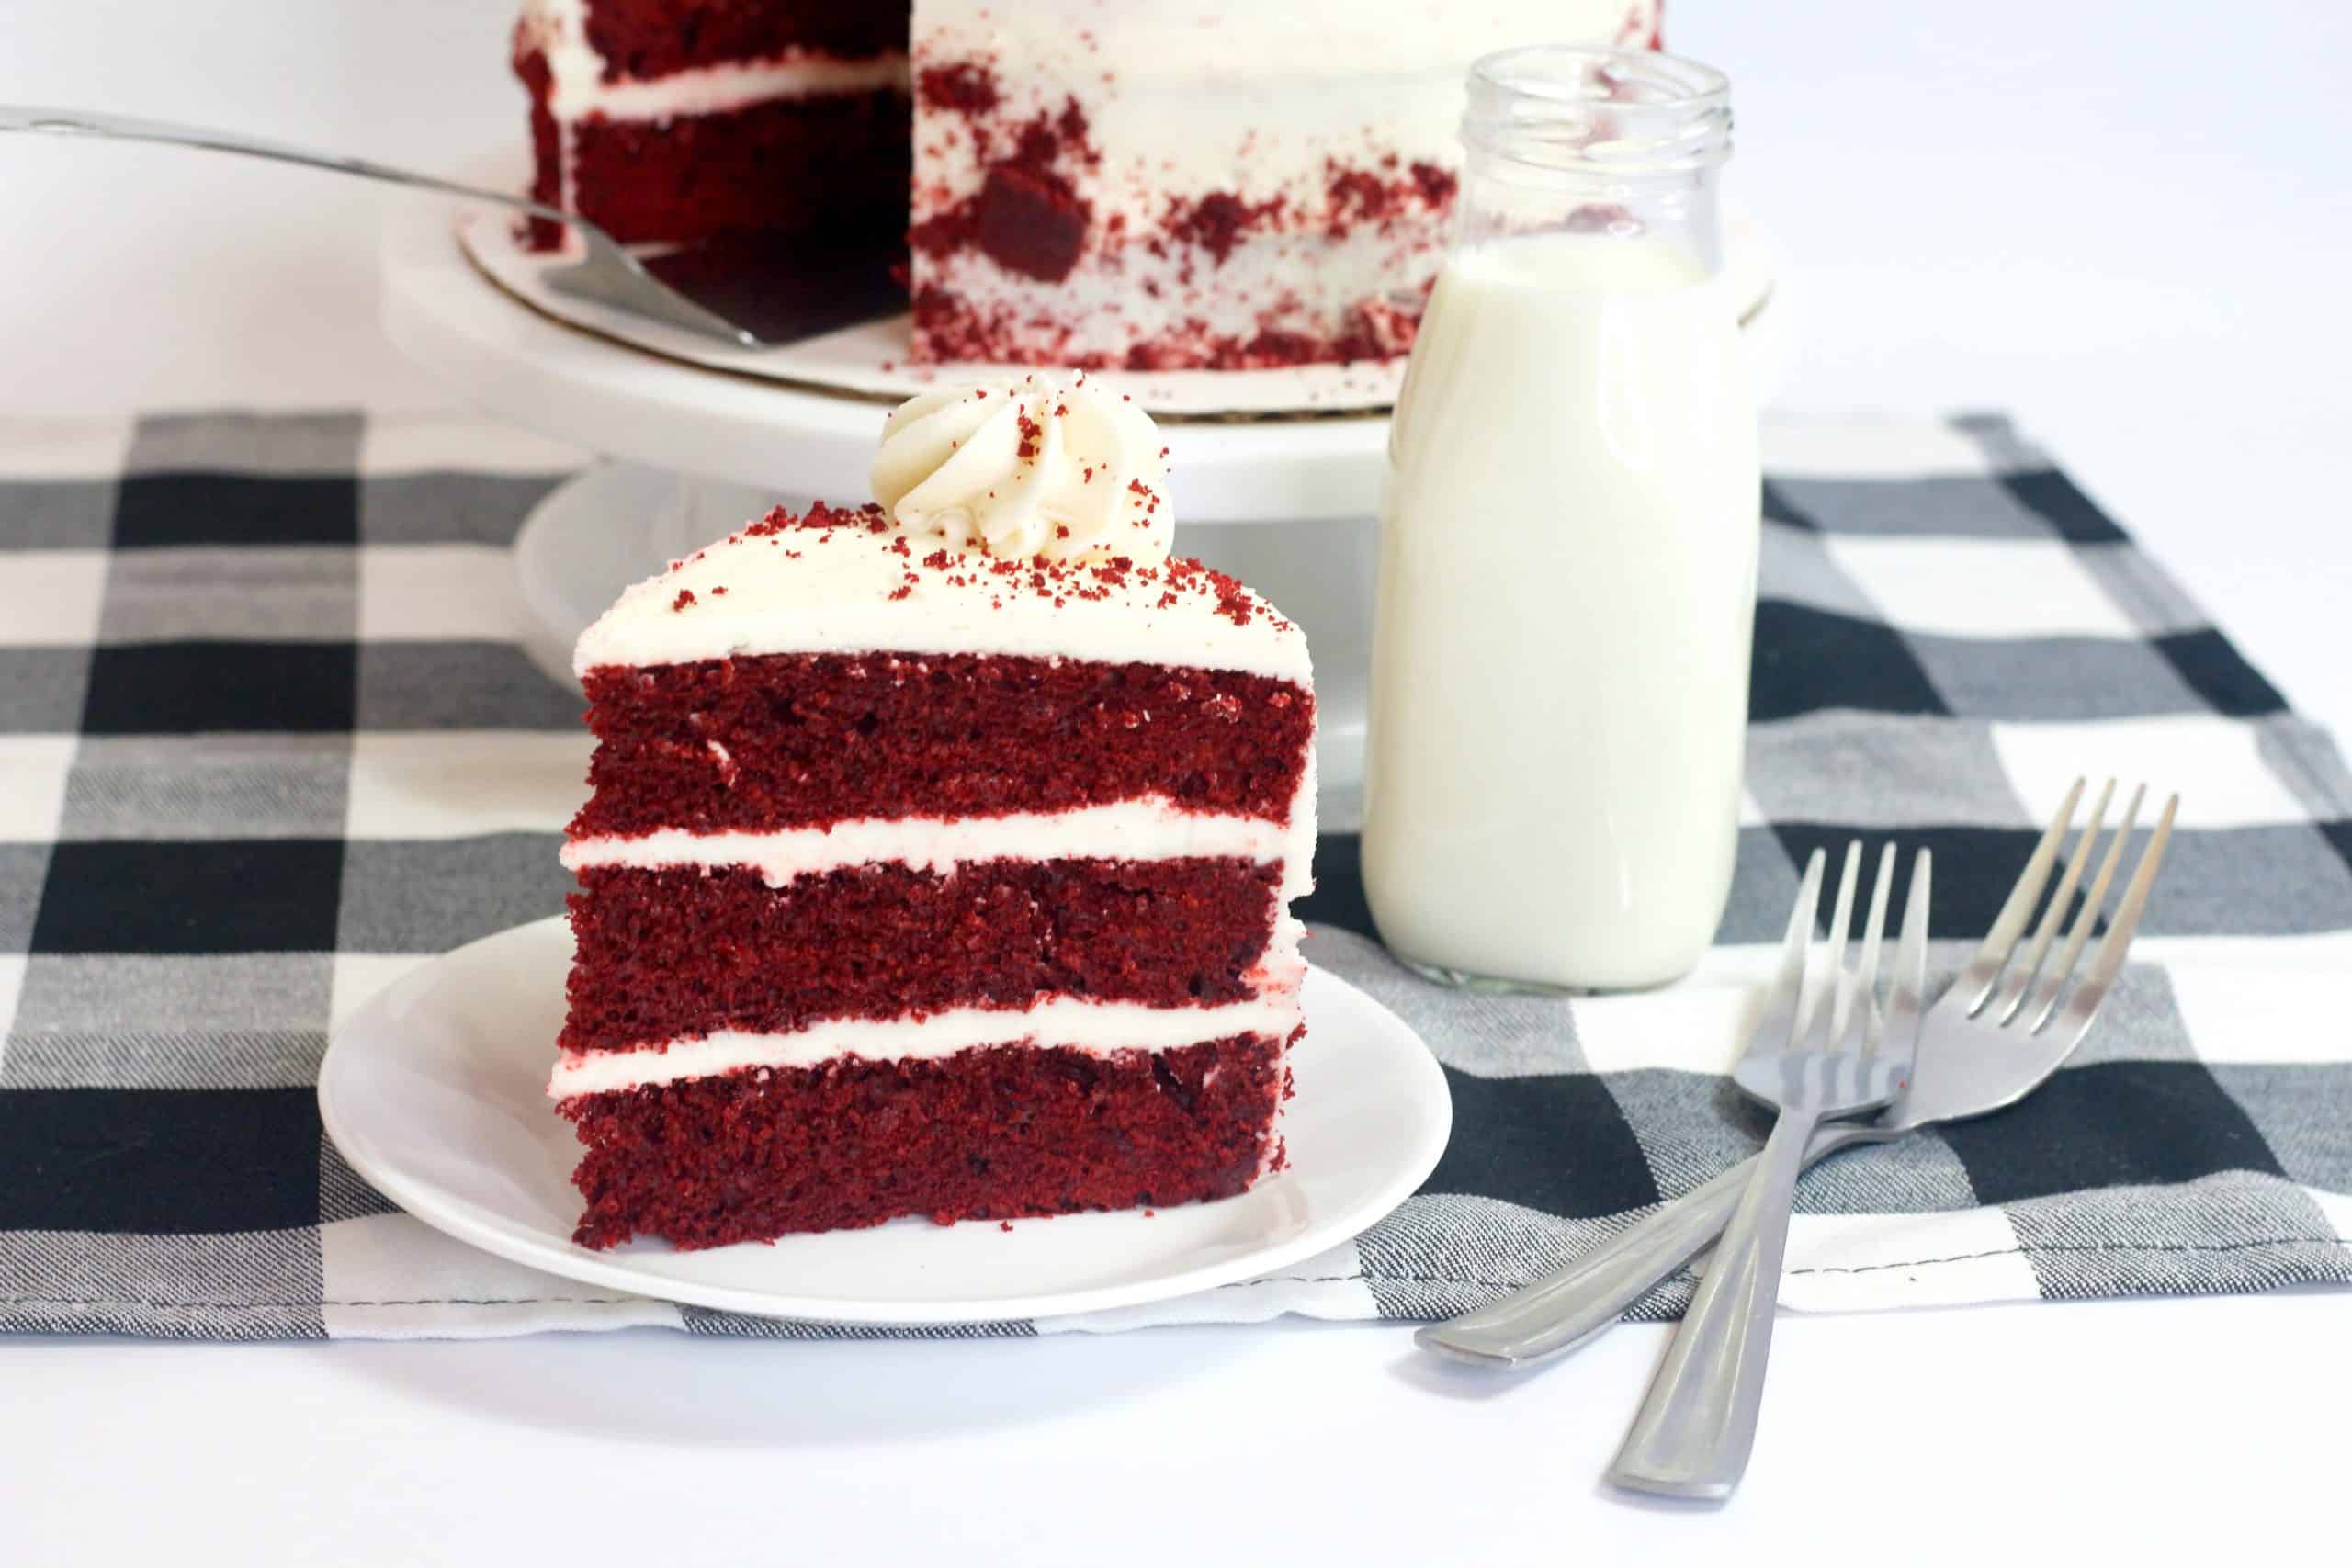 Can You Make Red Velvet Cake In A Bundt Pan